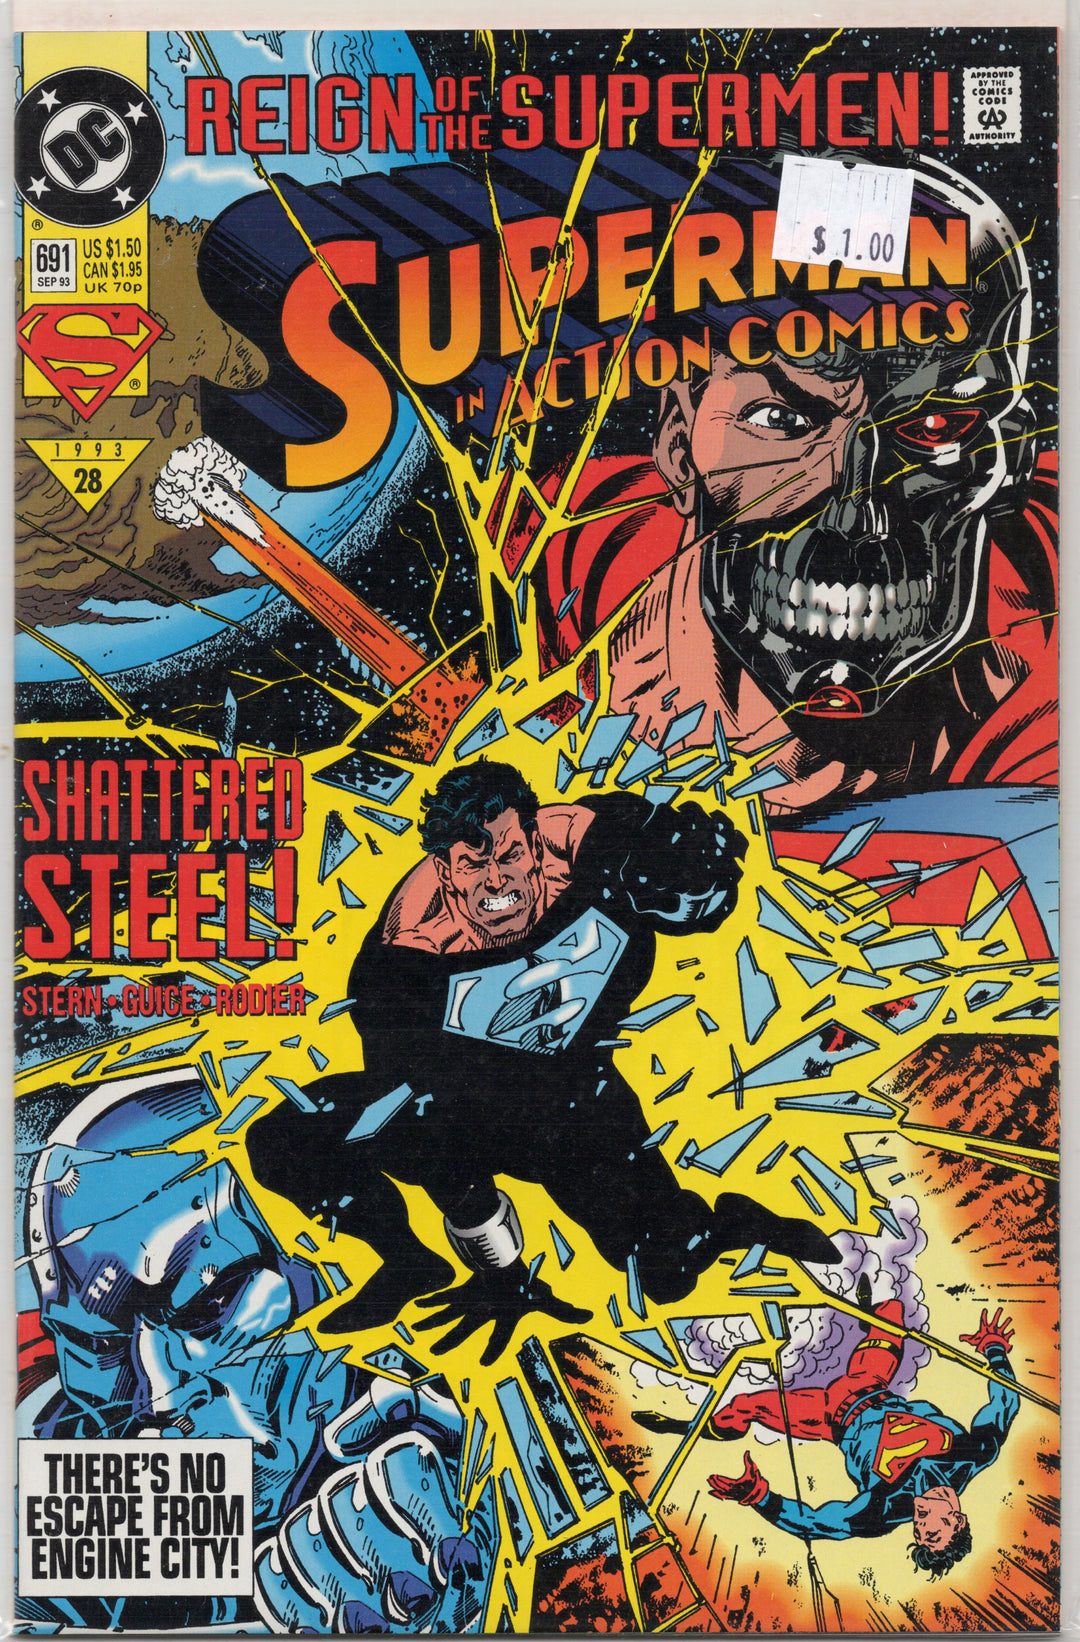 Superman Action Comics #691